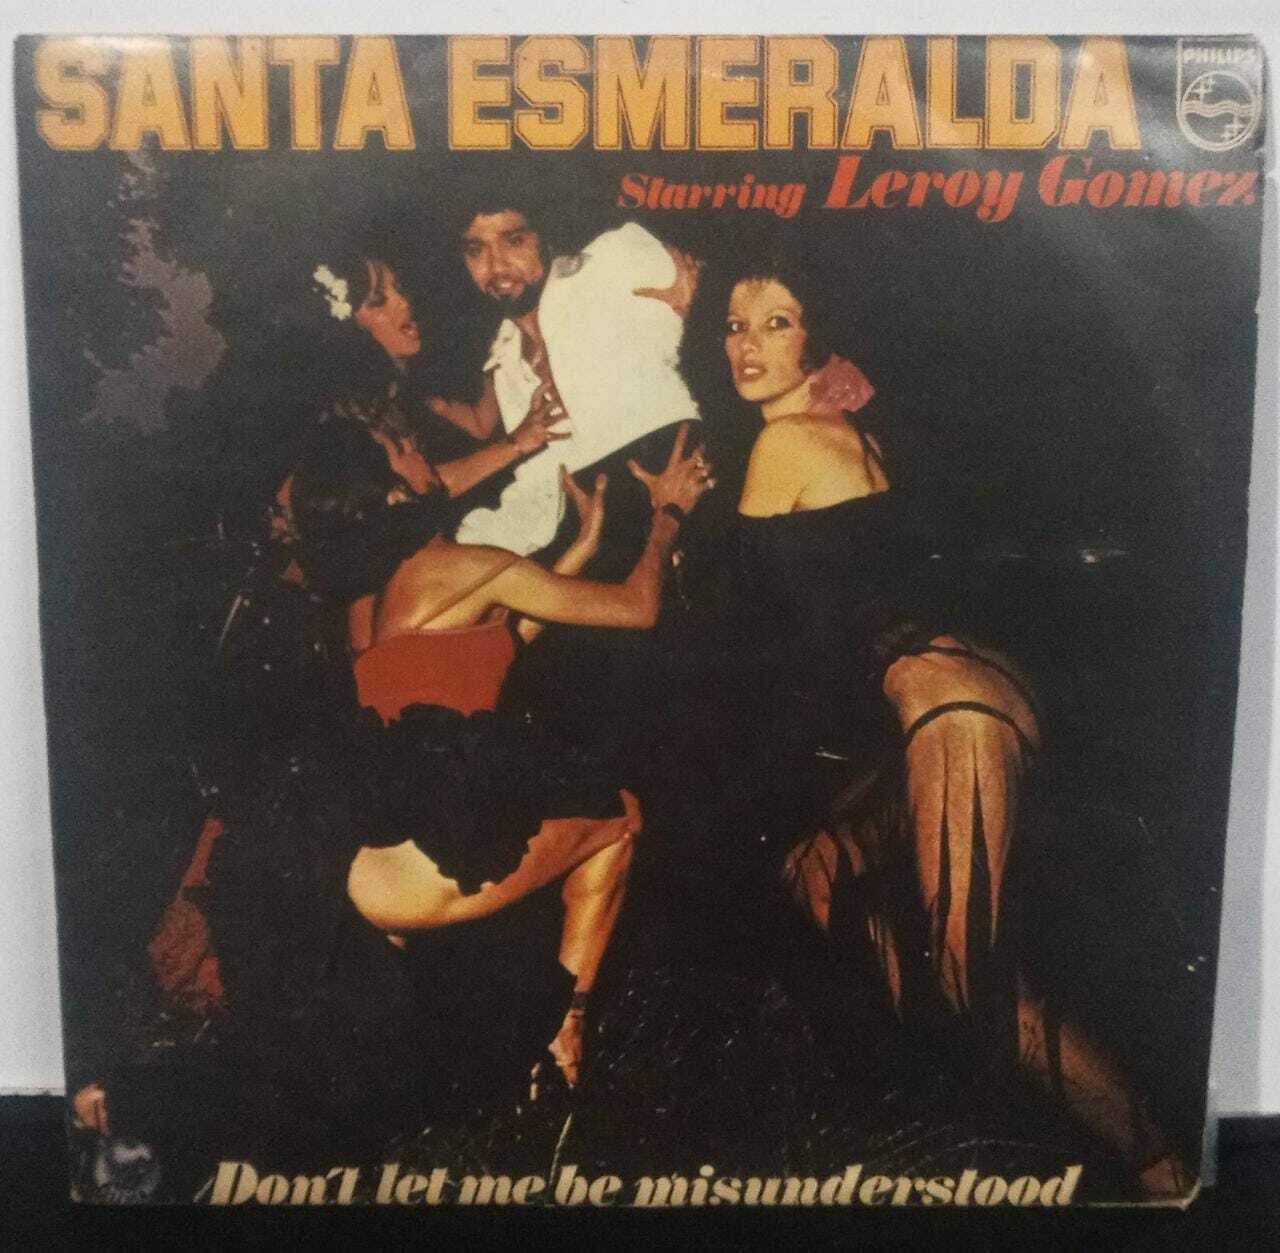 Vinil - Santa Esmeralda St Leroy Gomez - Dont Let Me Be Understood